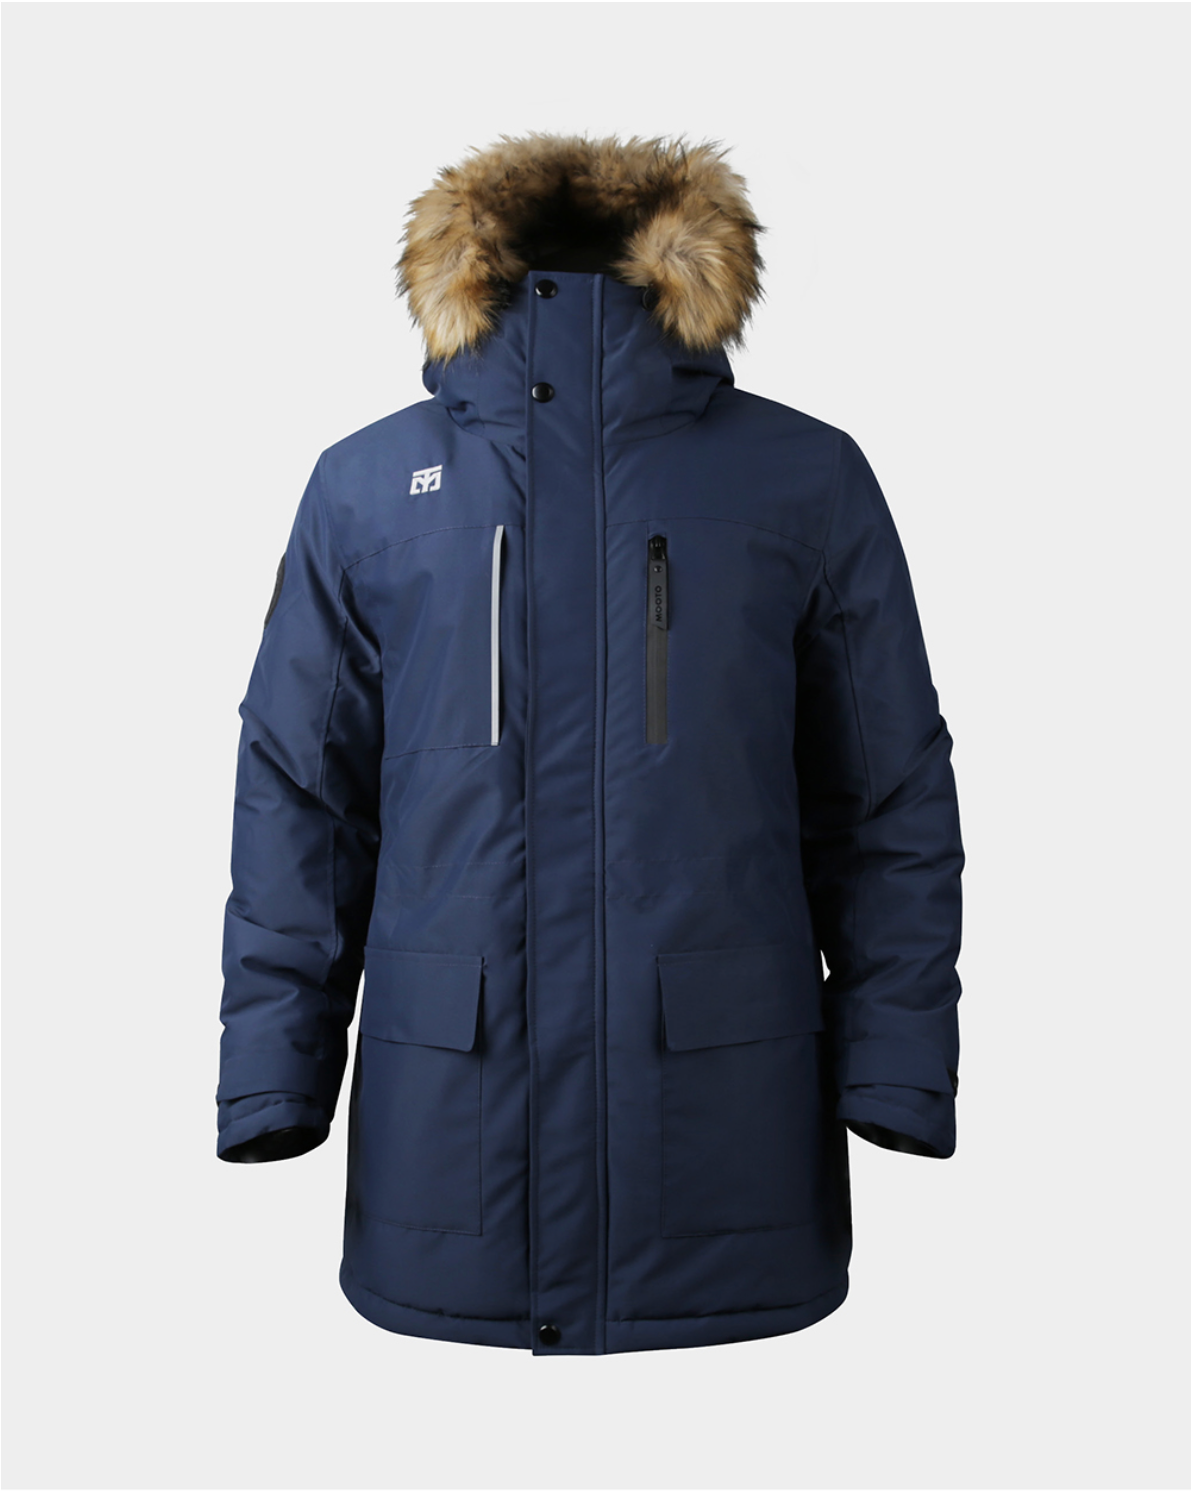 EUROPA Winter Jacket (Navy)